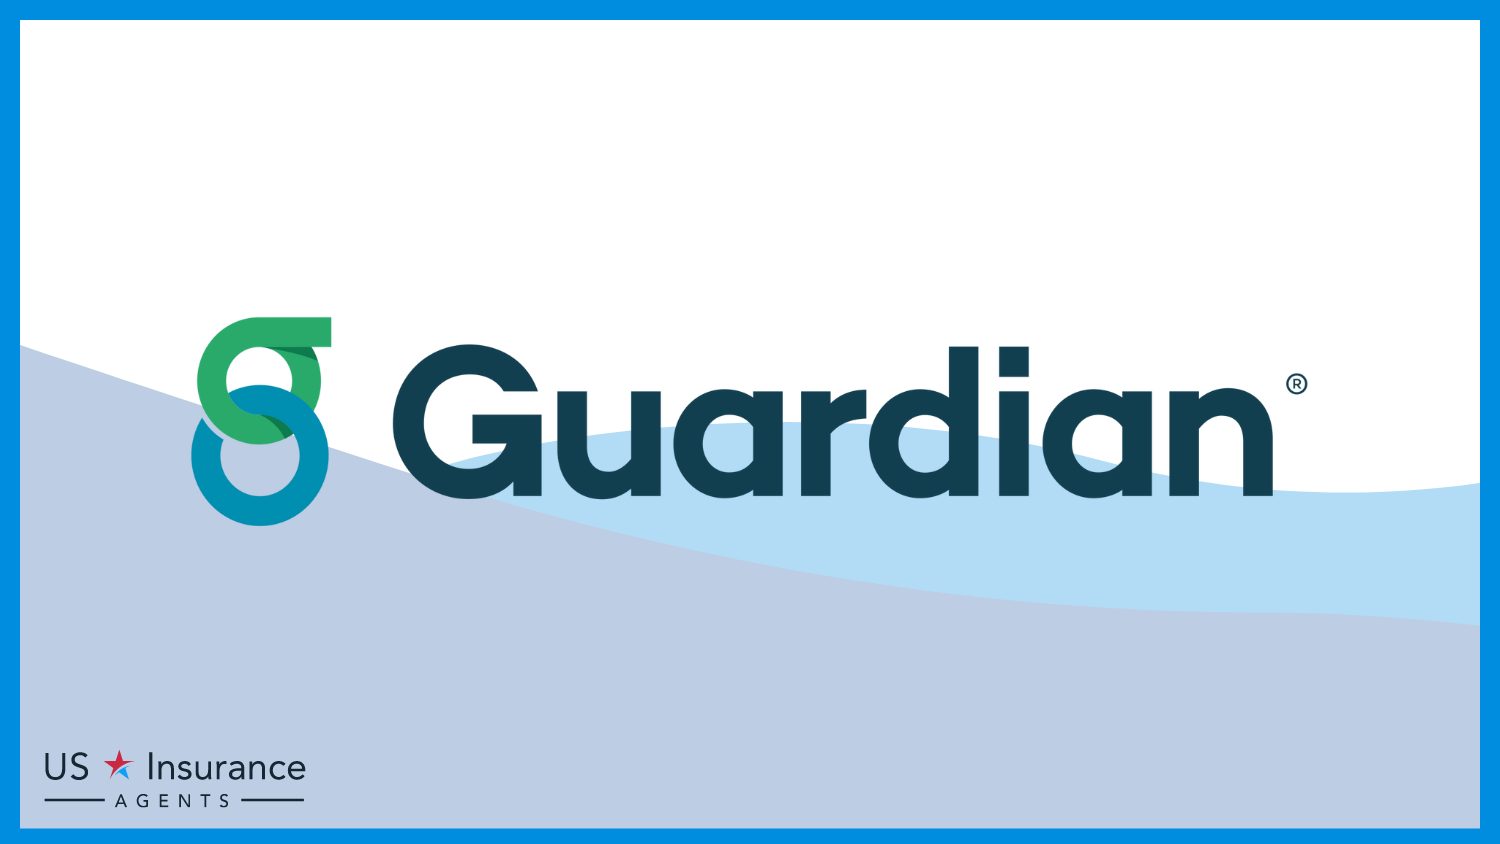 Guardian Life: Best Life Insurance for Teachers